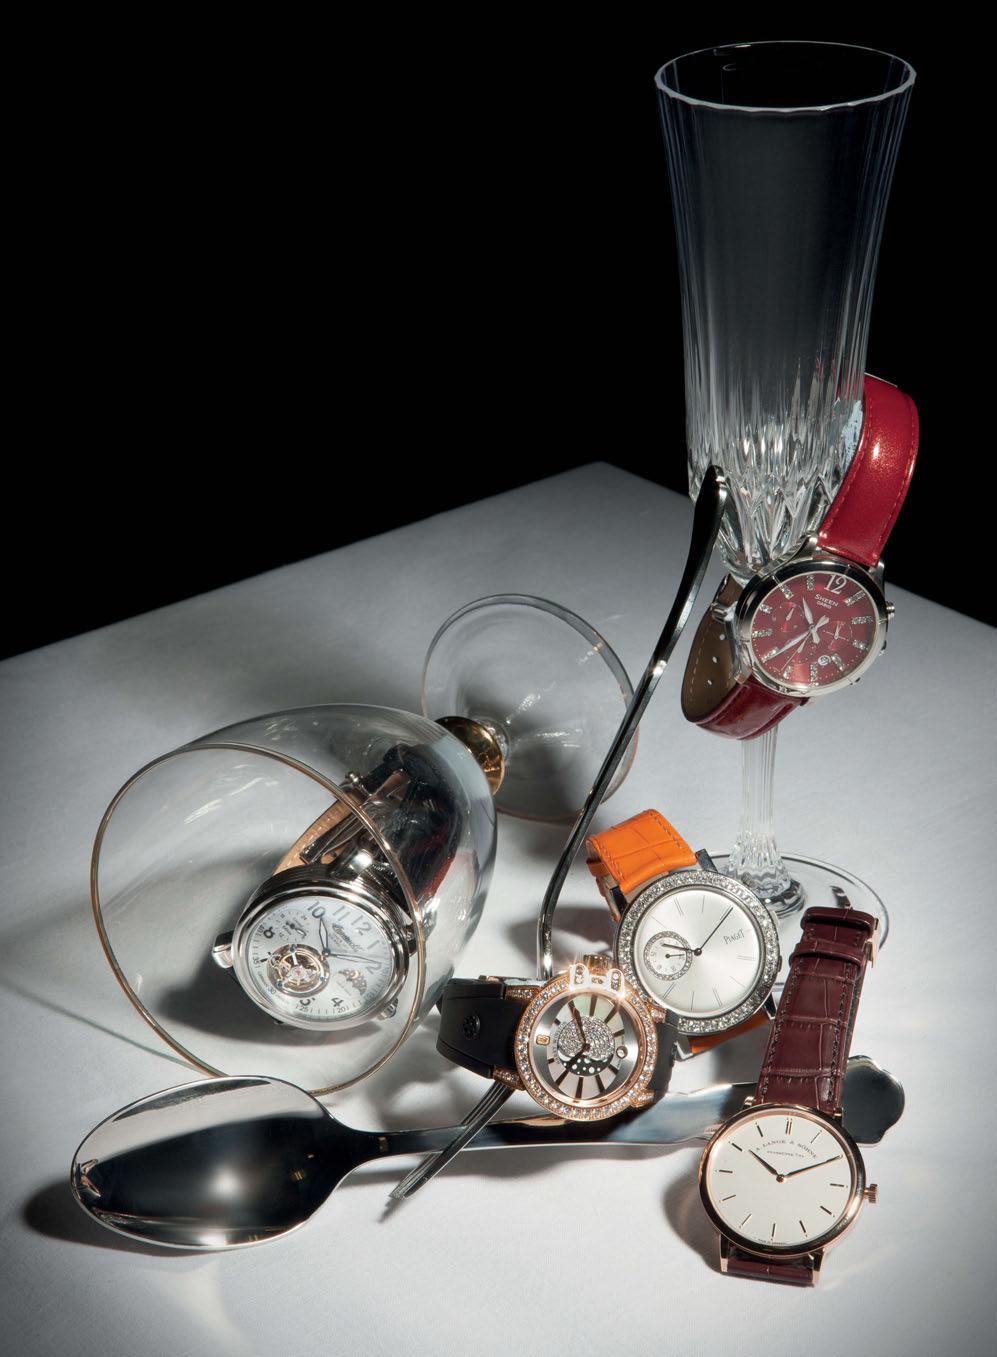 Sheen 5020L, γυναικείο ρολόι με λουράκι από γνήσιο δέρμα και αυθεντικά στοιχεία Swarovski, 189,40 (ΕΛΜΗ Systems). 2. Ingersoll, Tourbillon Lahota, ατσάλινο ρολόι, με κροκό λουράκι, 1.949 (G.